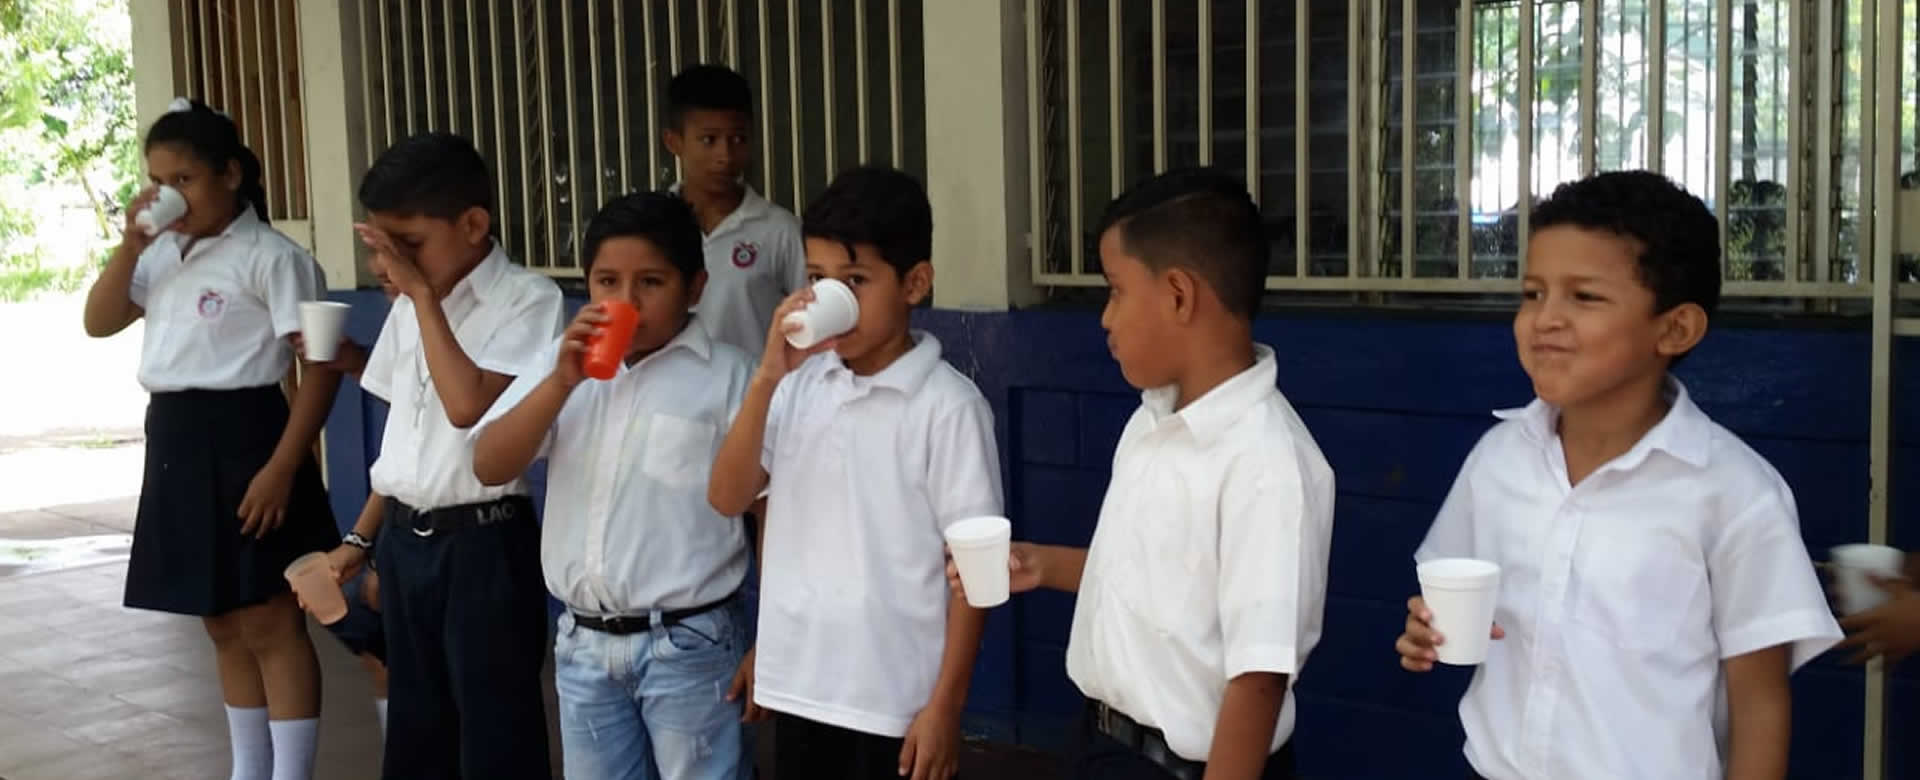 MINSA visita centros escolares para aplicar flúor a niños y niñas